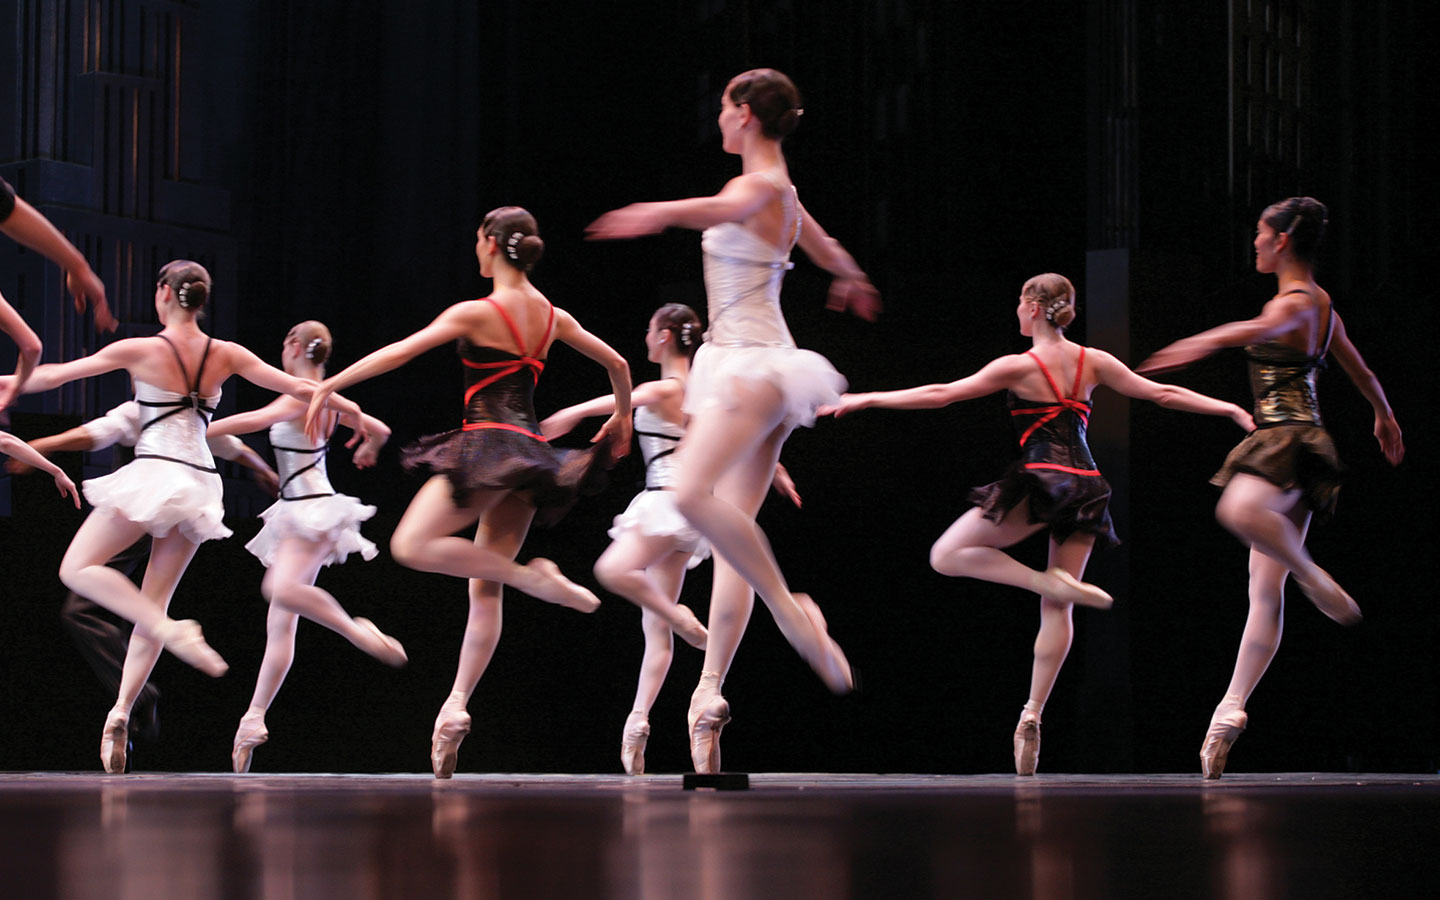 Ballet dancers performing on stage